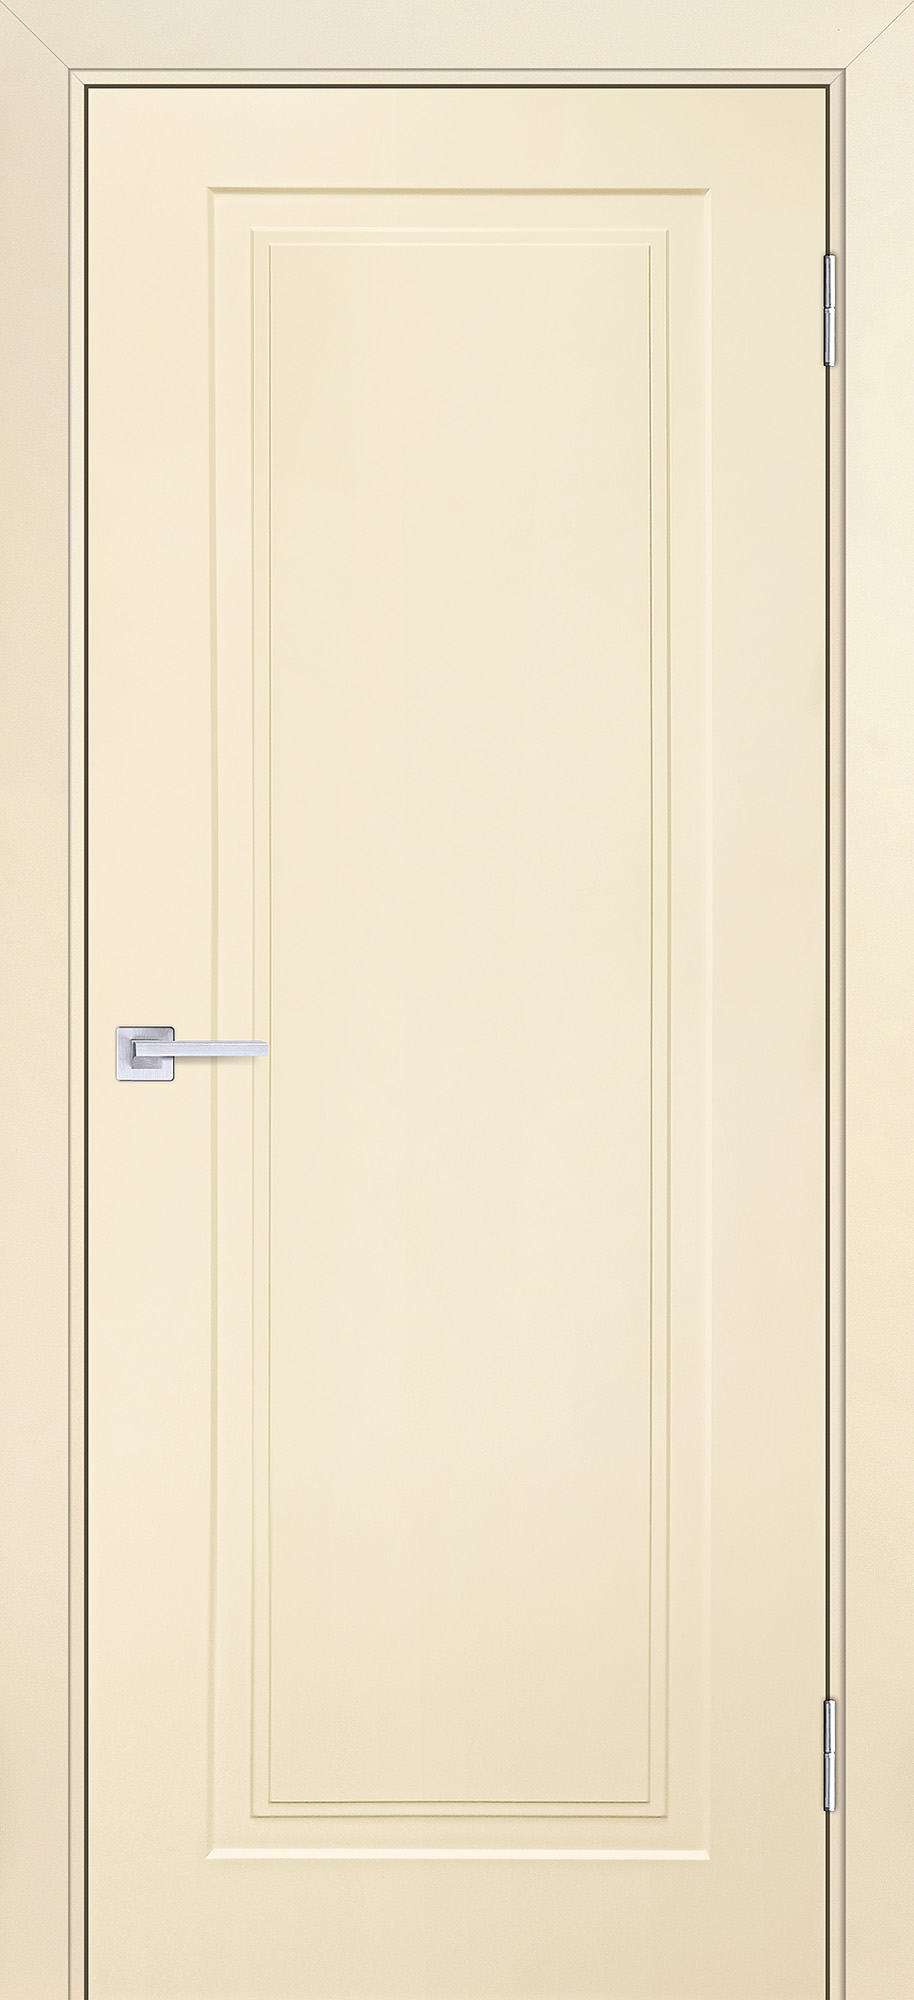 Двери крашеные (Эмаль) ТЕКОНА Смальта-Лайн 06 глухое Айвори ral 1013 размер 200 х 90 см. артикул F0000093275